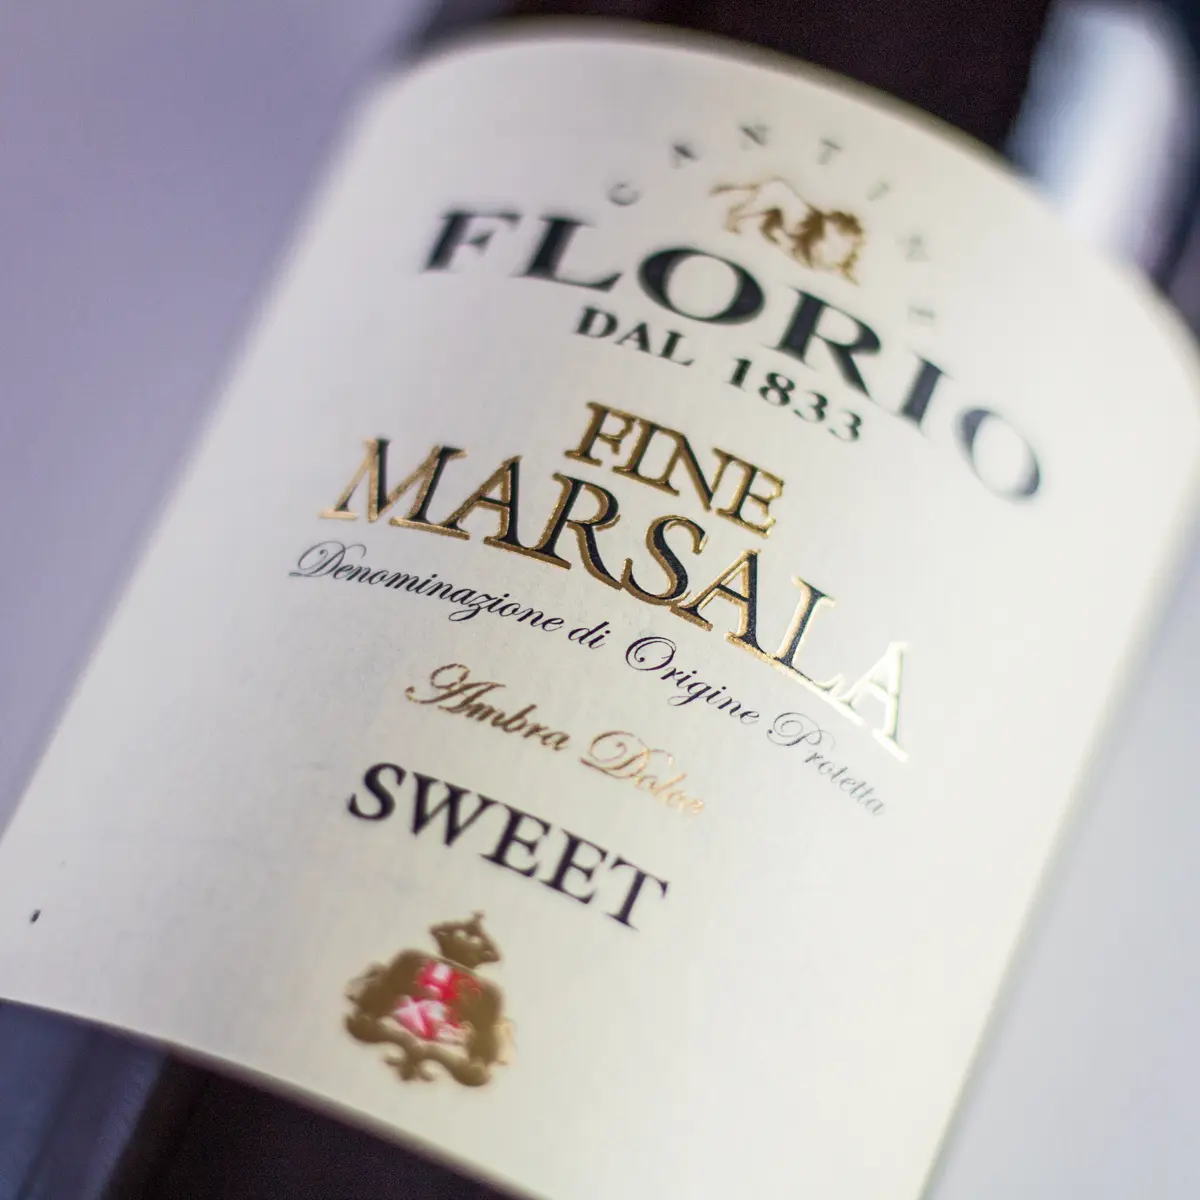 Large square Marsala Wine Substitute image showing bottle label.